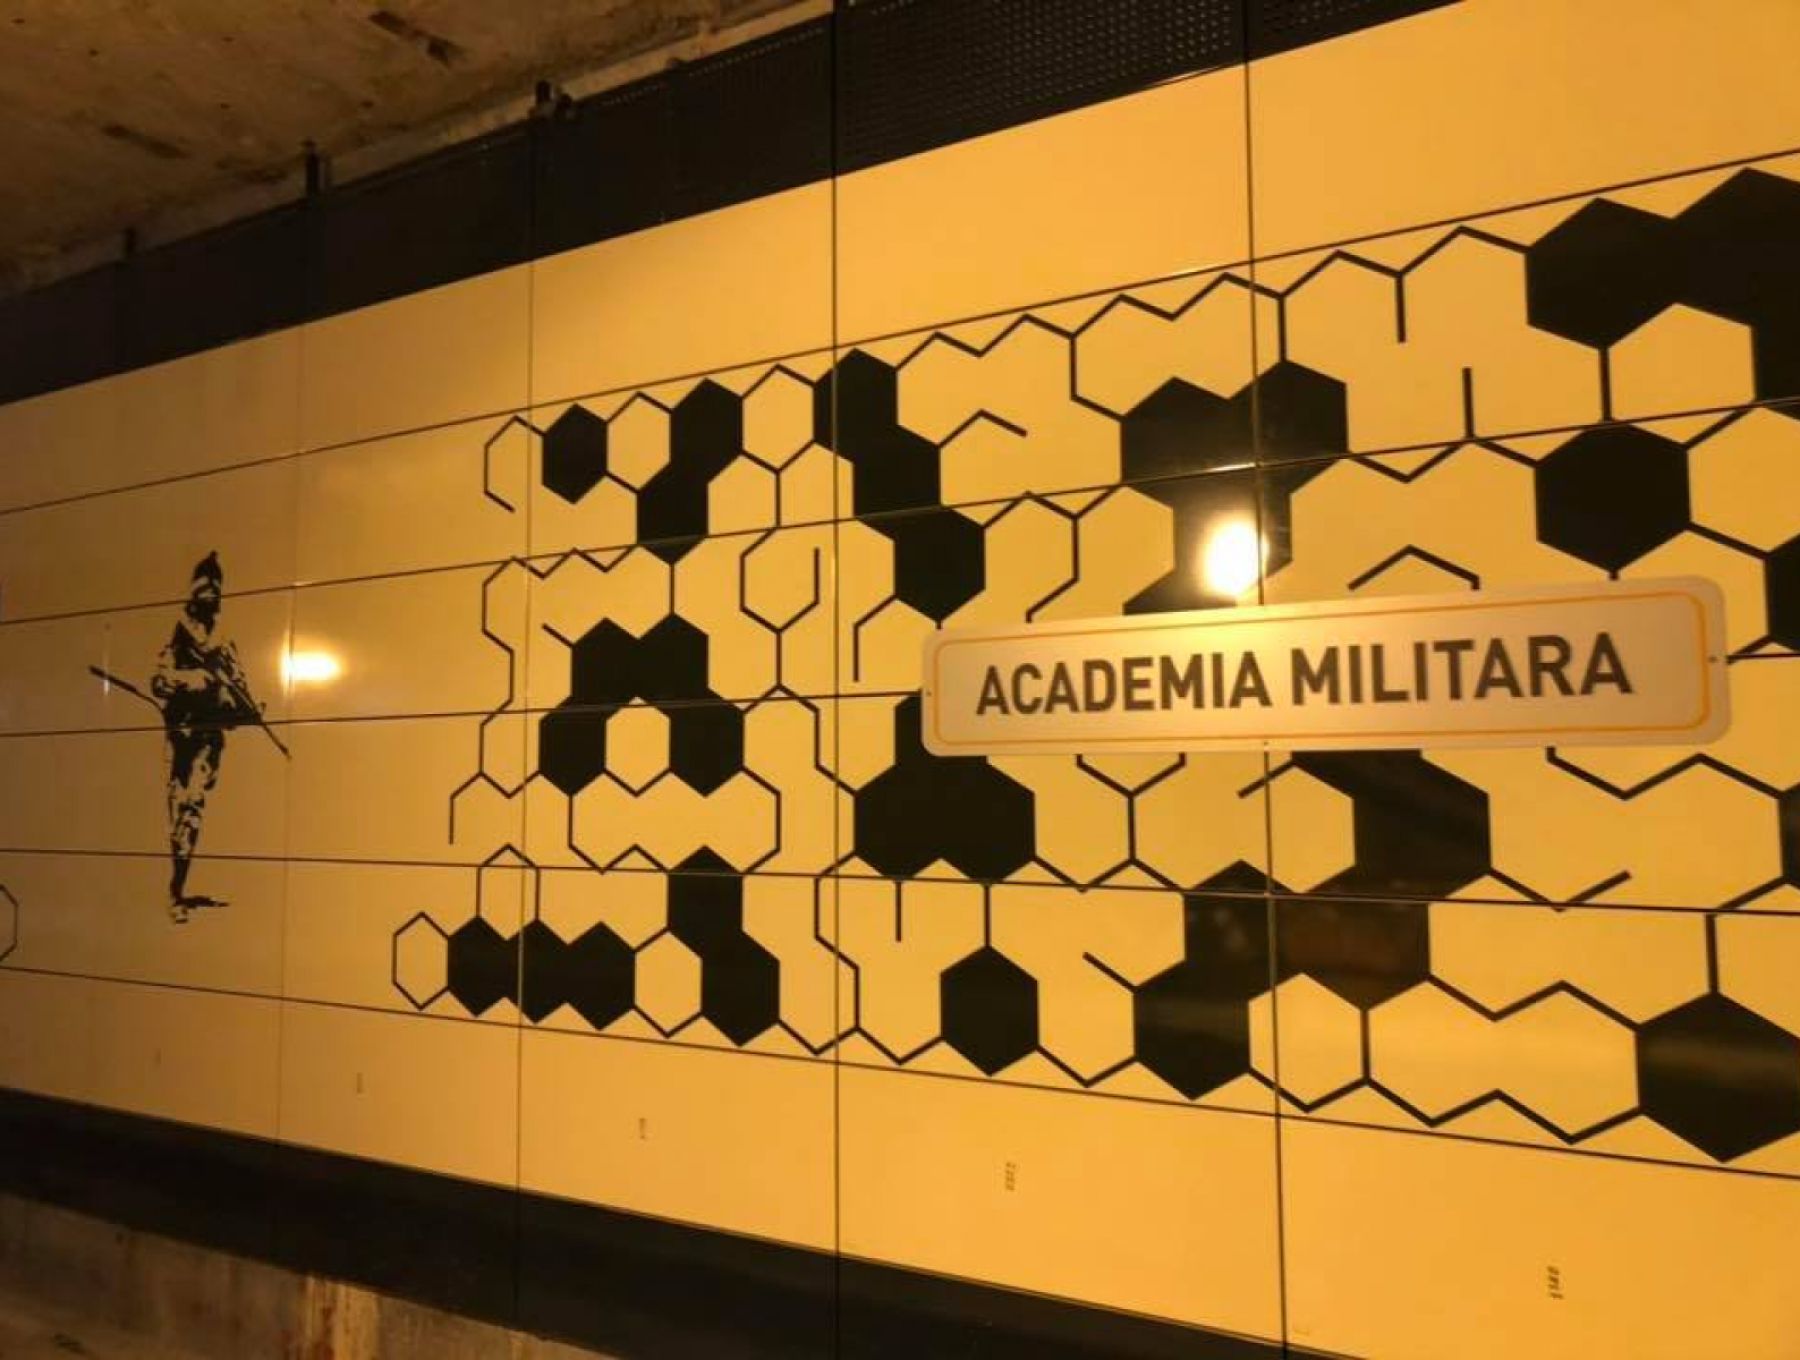 Inauguration of the metro station from Cotroceni – Academia Militara